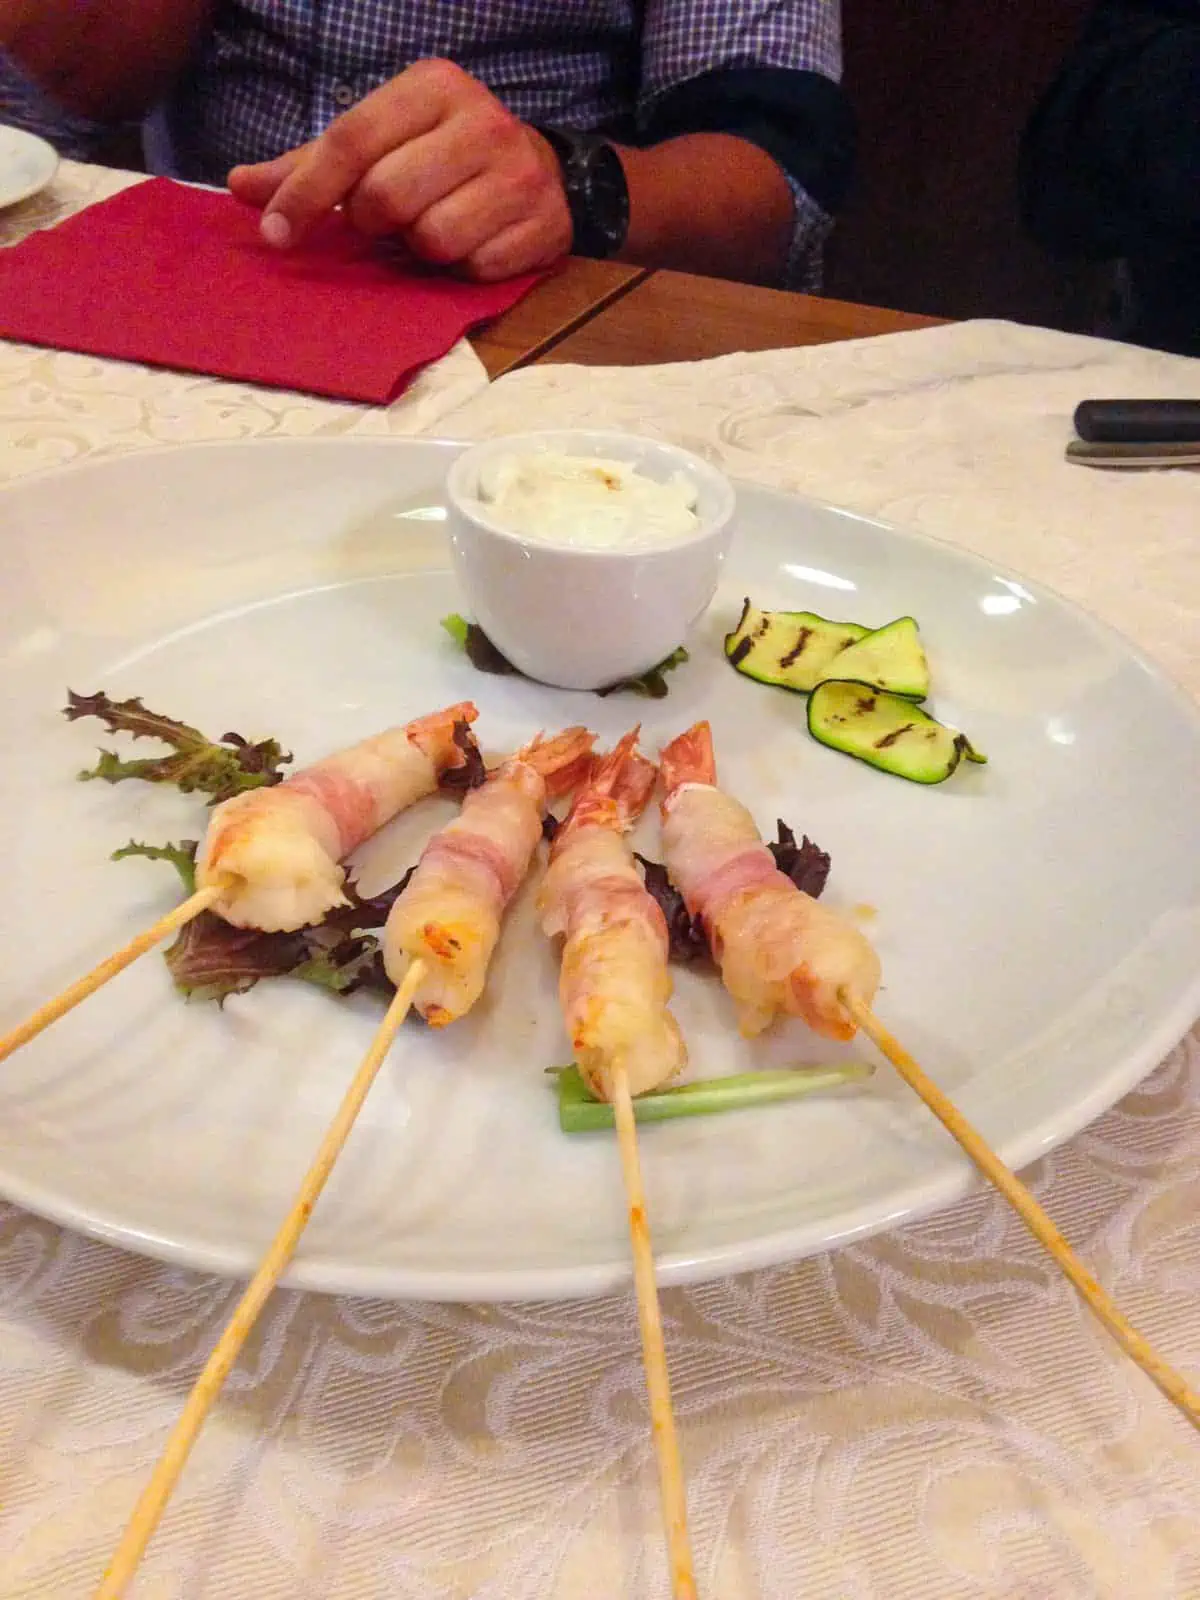 shrimp wrapped in lardo with gorgonzola sauce in Torino, Italy